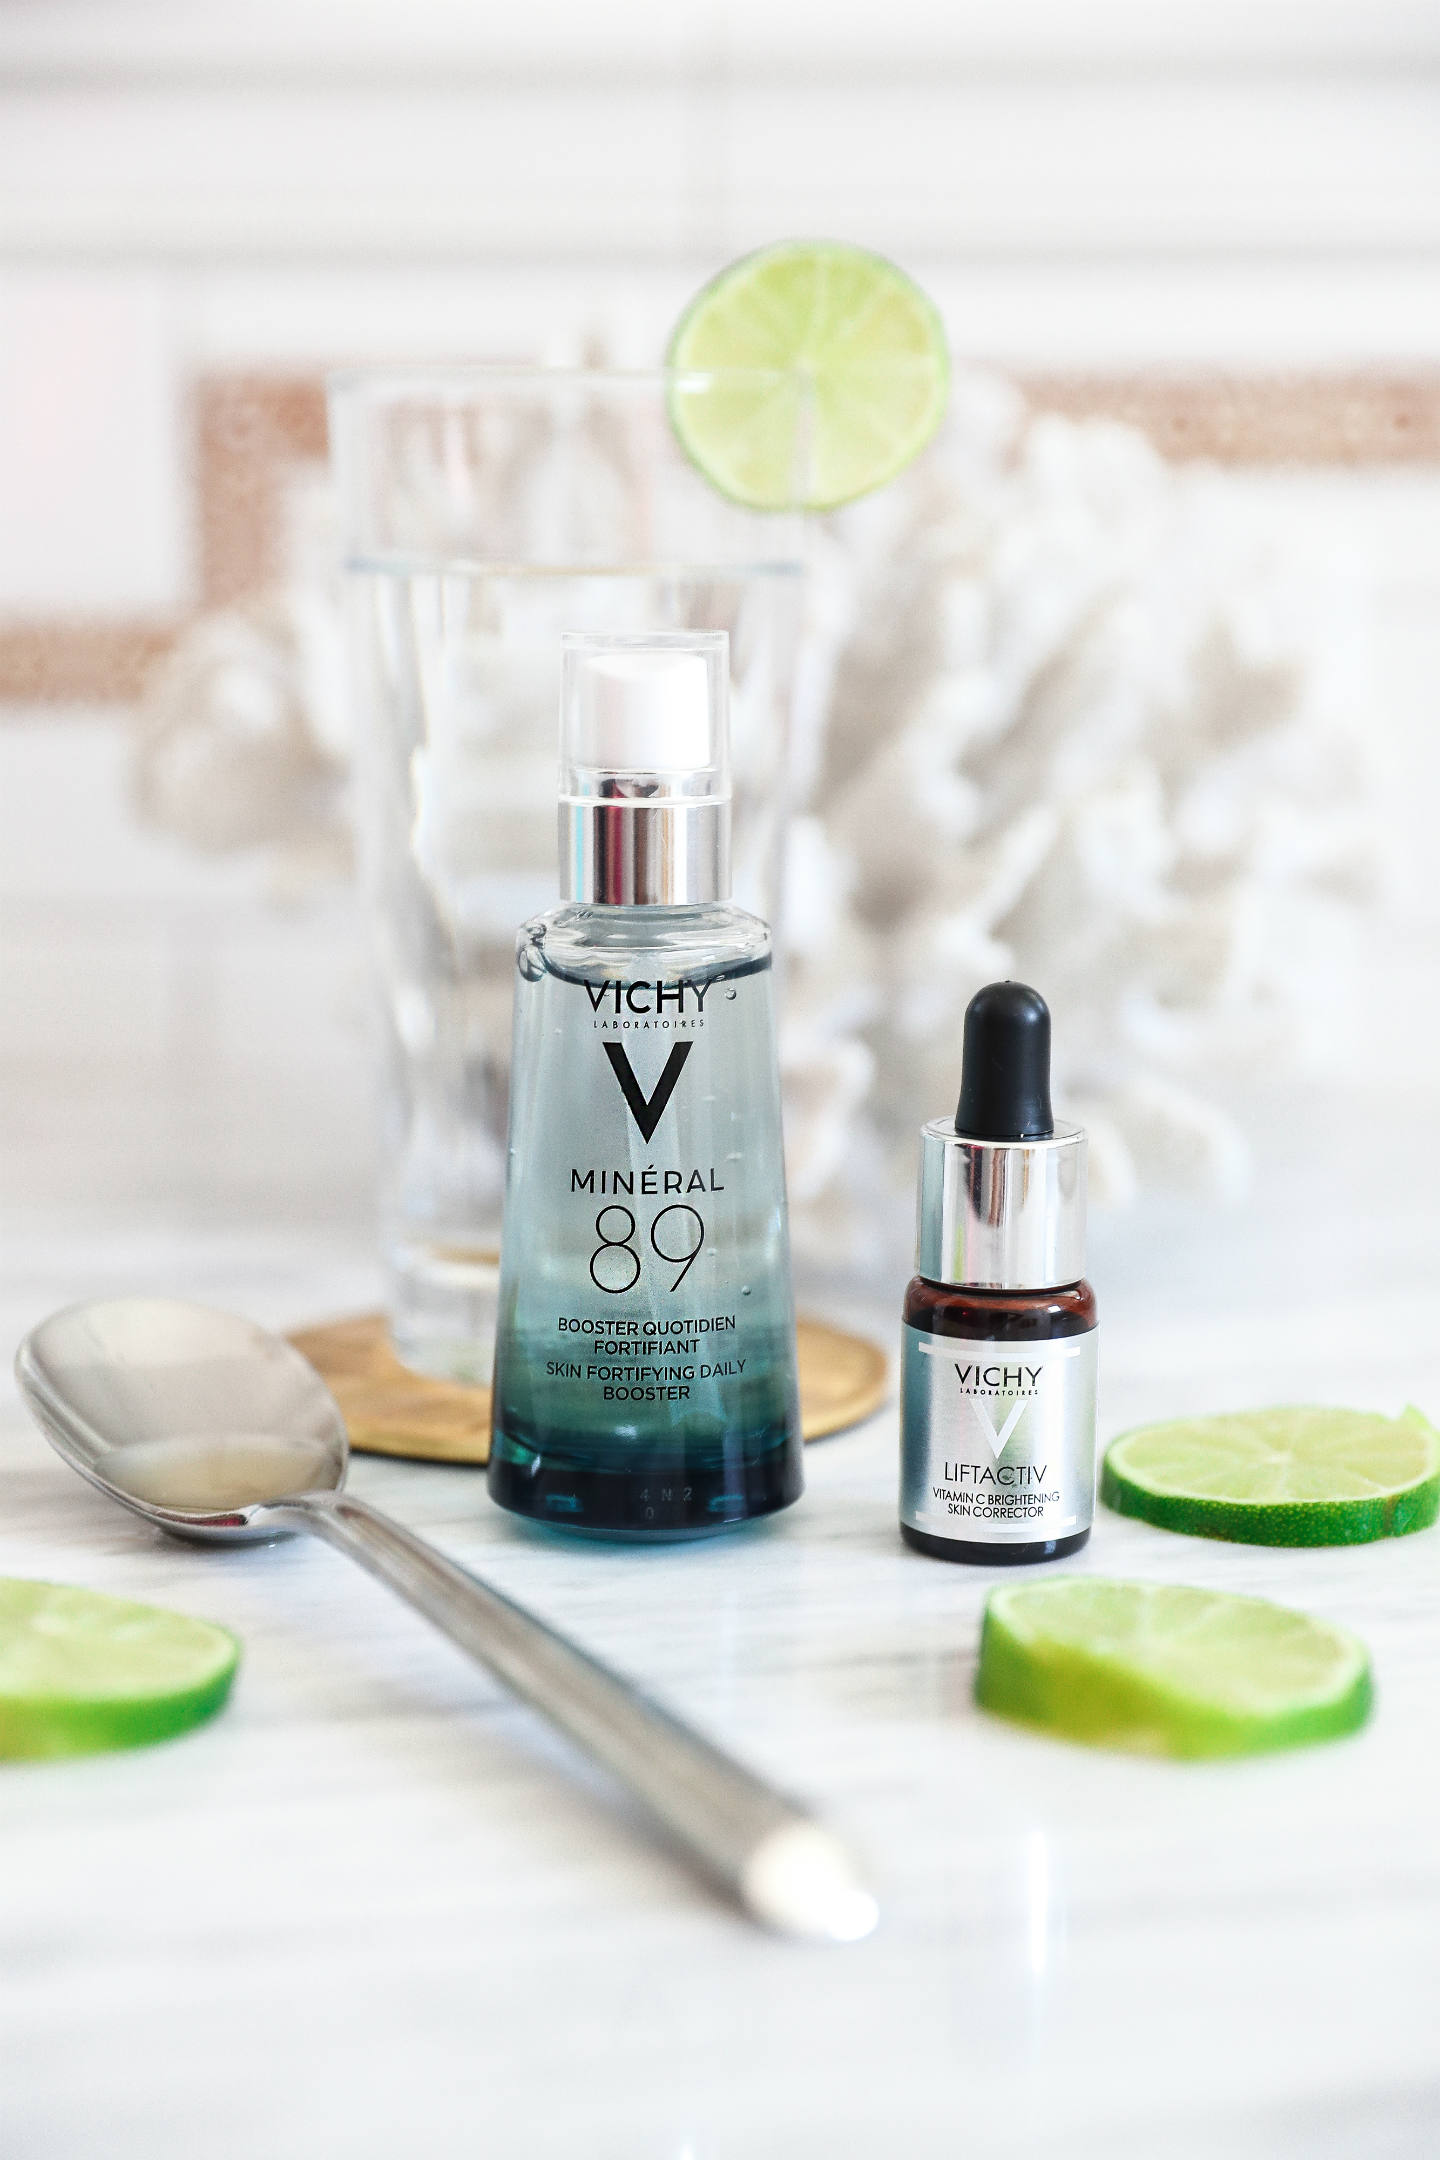 Vichy Mineral 89 bottle and LiftActiv Vitamin C Serum